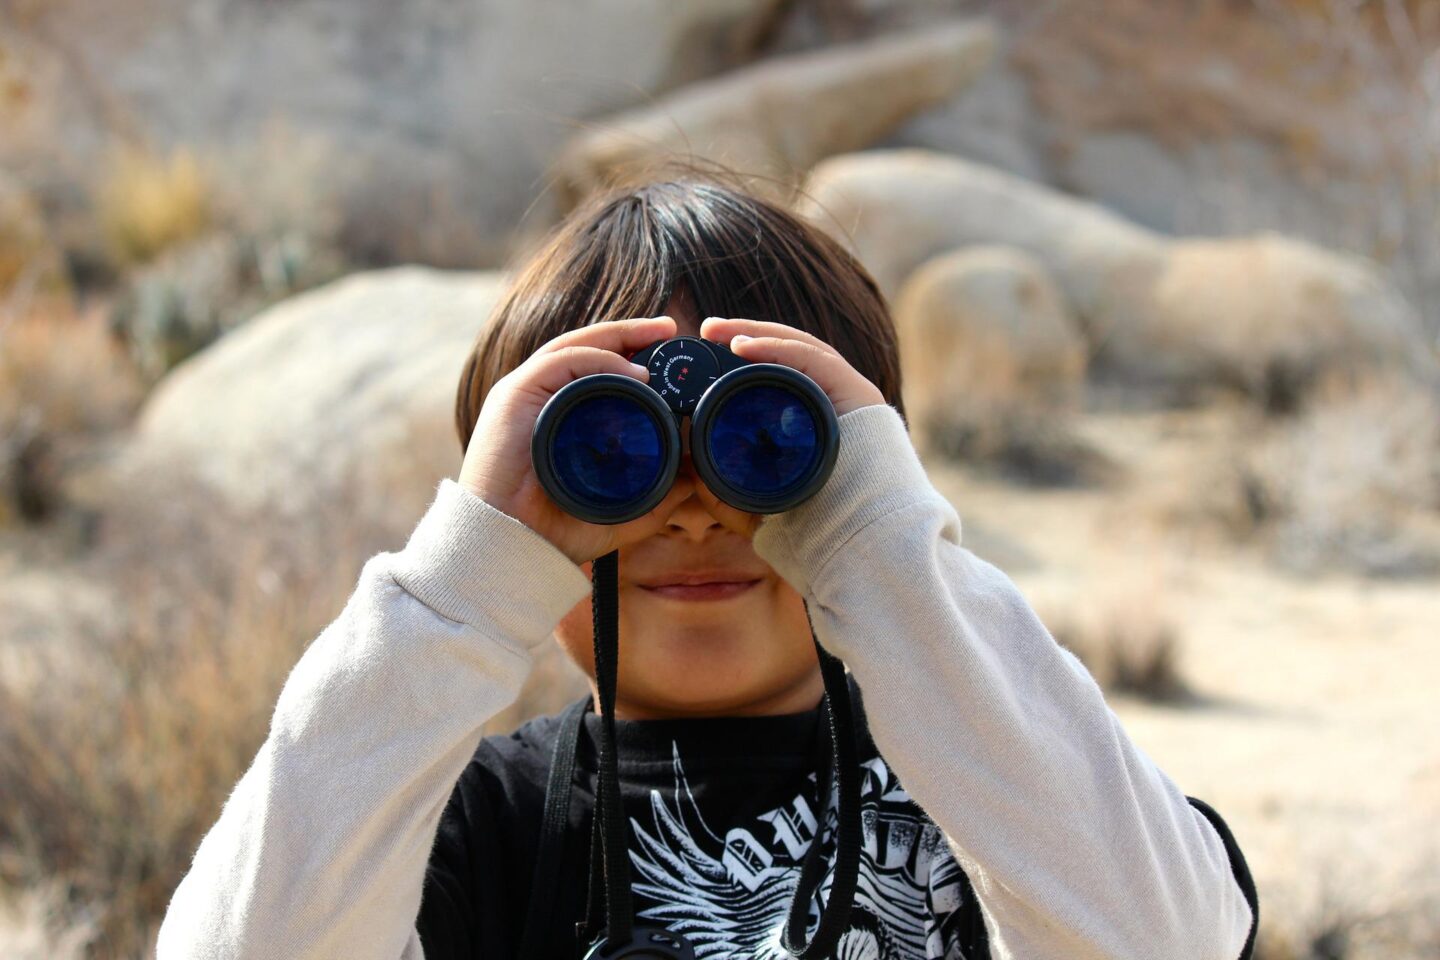  how to protect wildlife, binoculars